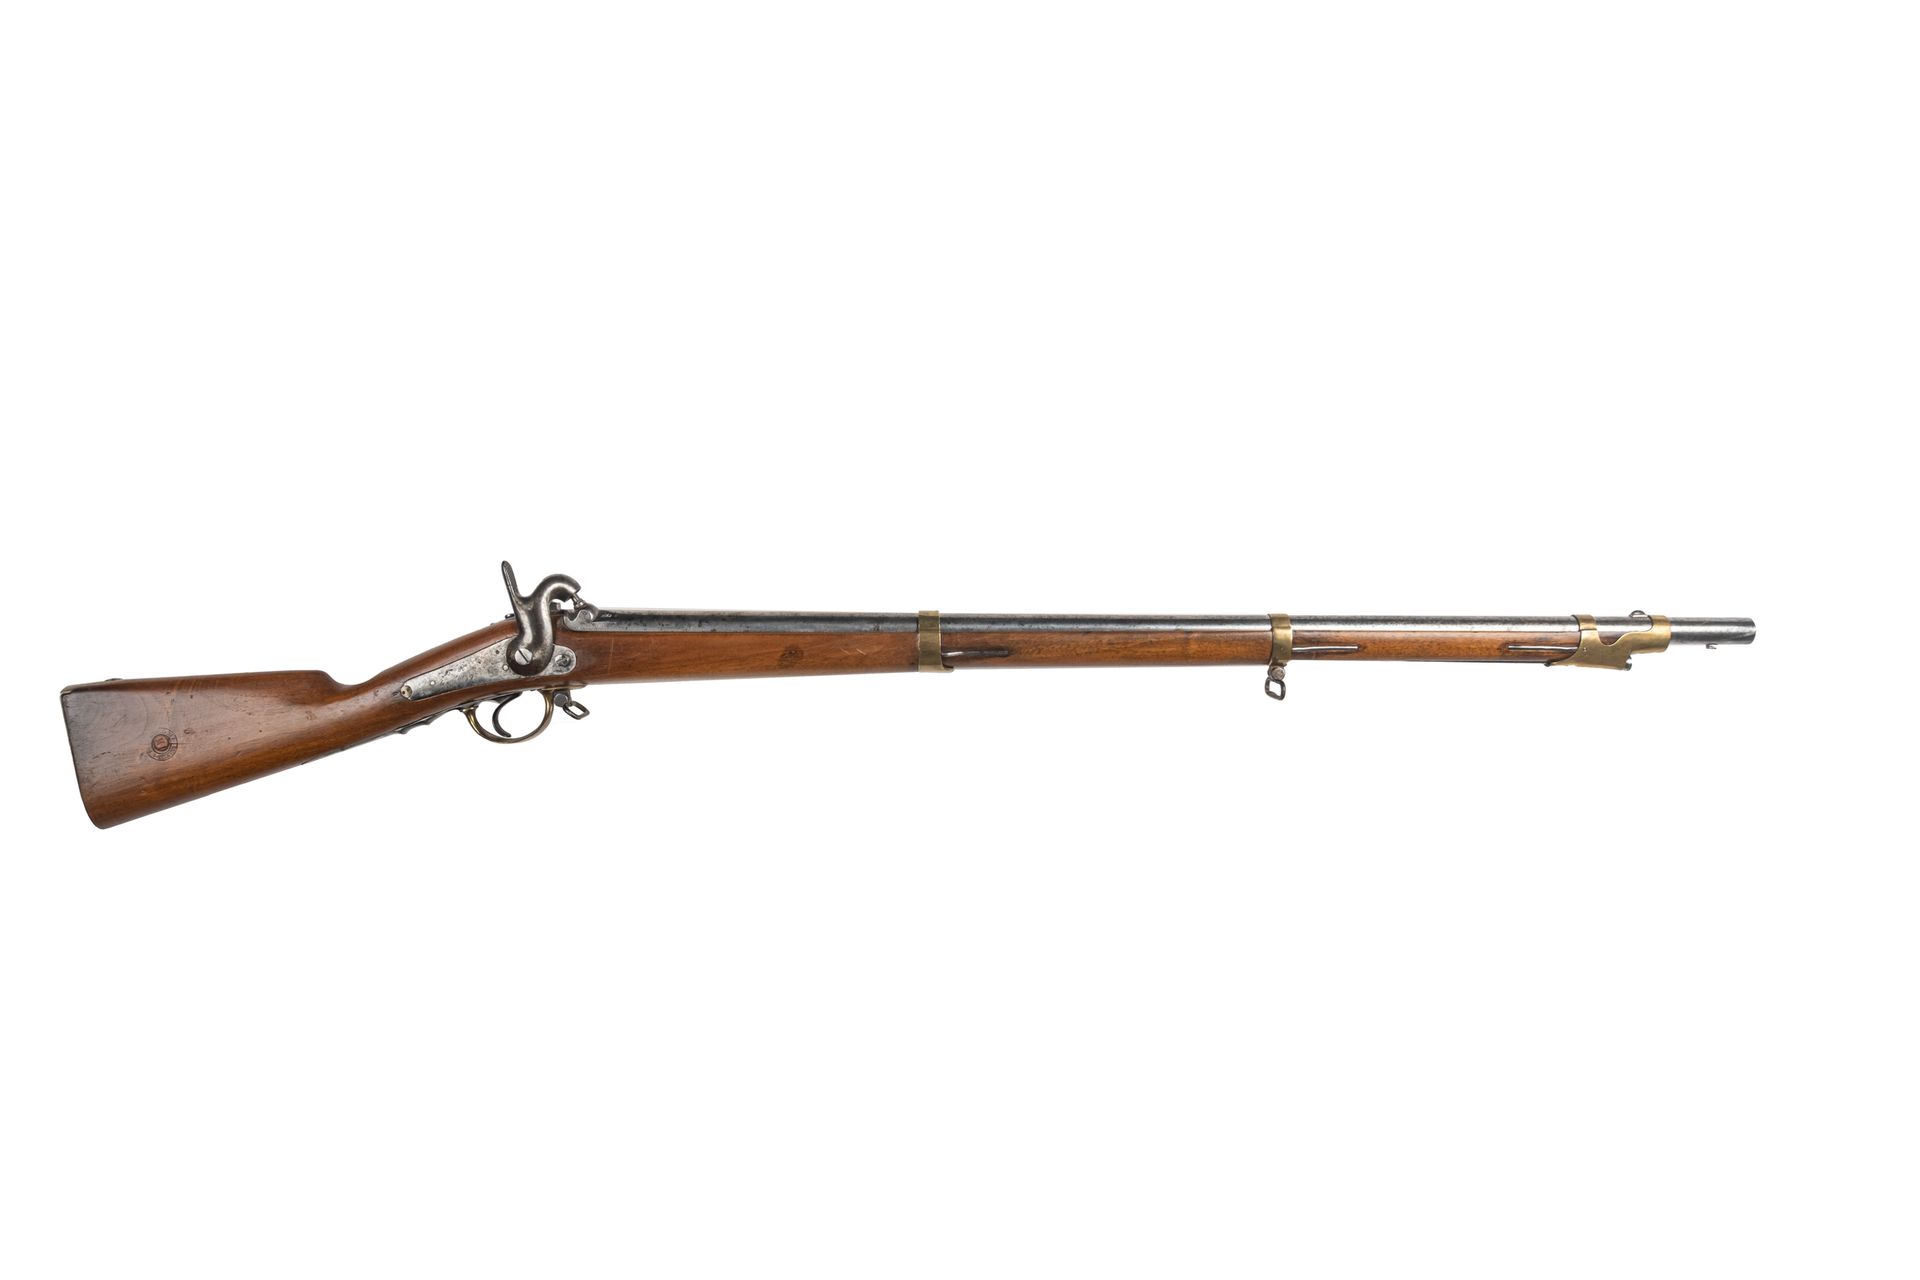 Null 安九型燧发枪，归属于海军。

圆形枪管上有雷鸣般的 "B 1813"。

刻有 "Mre Impale de Tulle "的锁和圆身锤子。黄铜配件（&hellip;